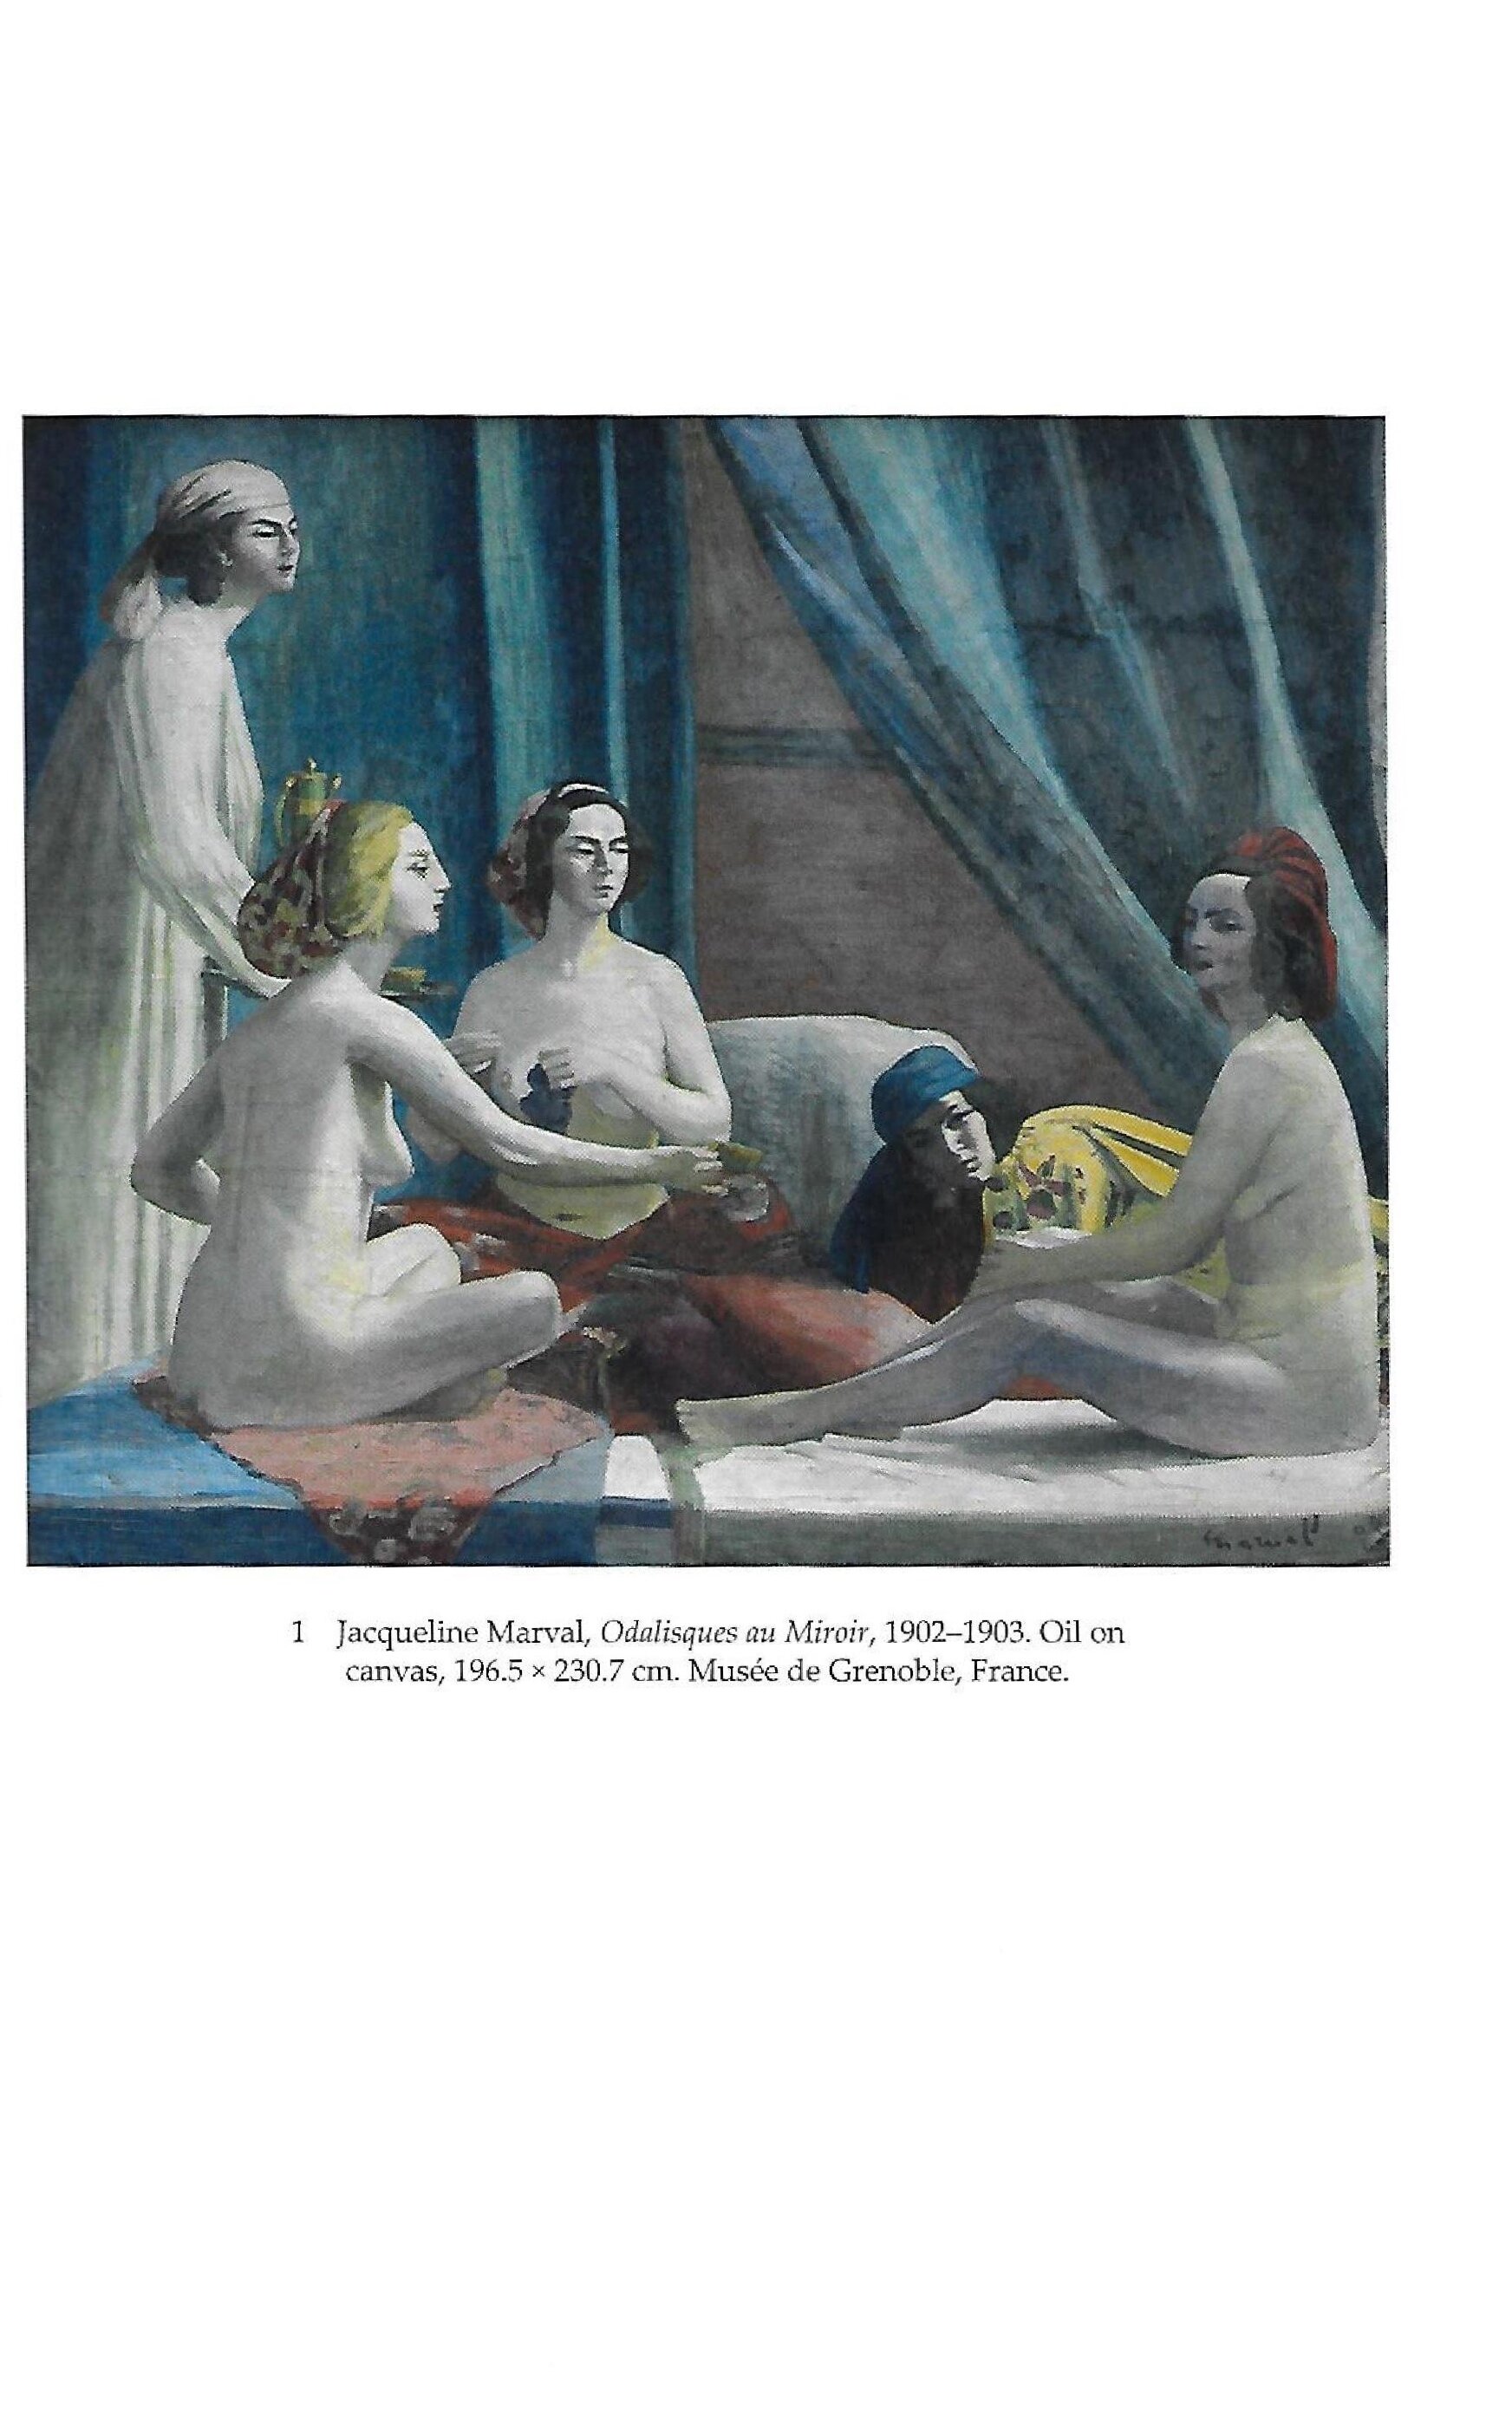 Women Artists in the Interwar France, Framing Femininities, Paula J. Birnbaum, 2011